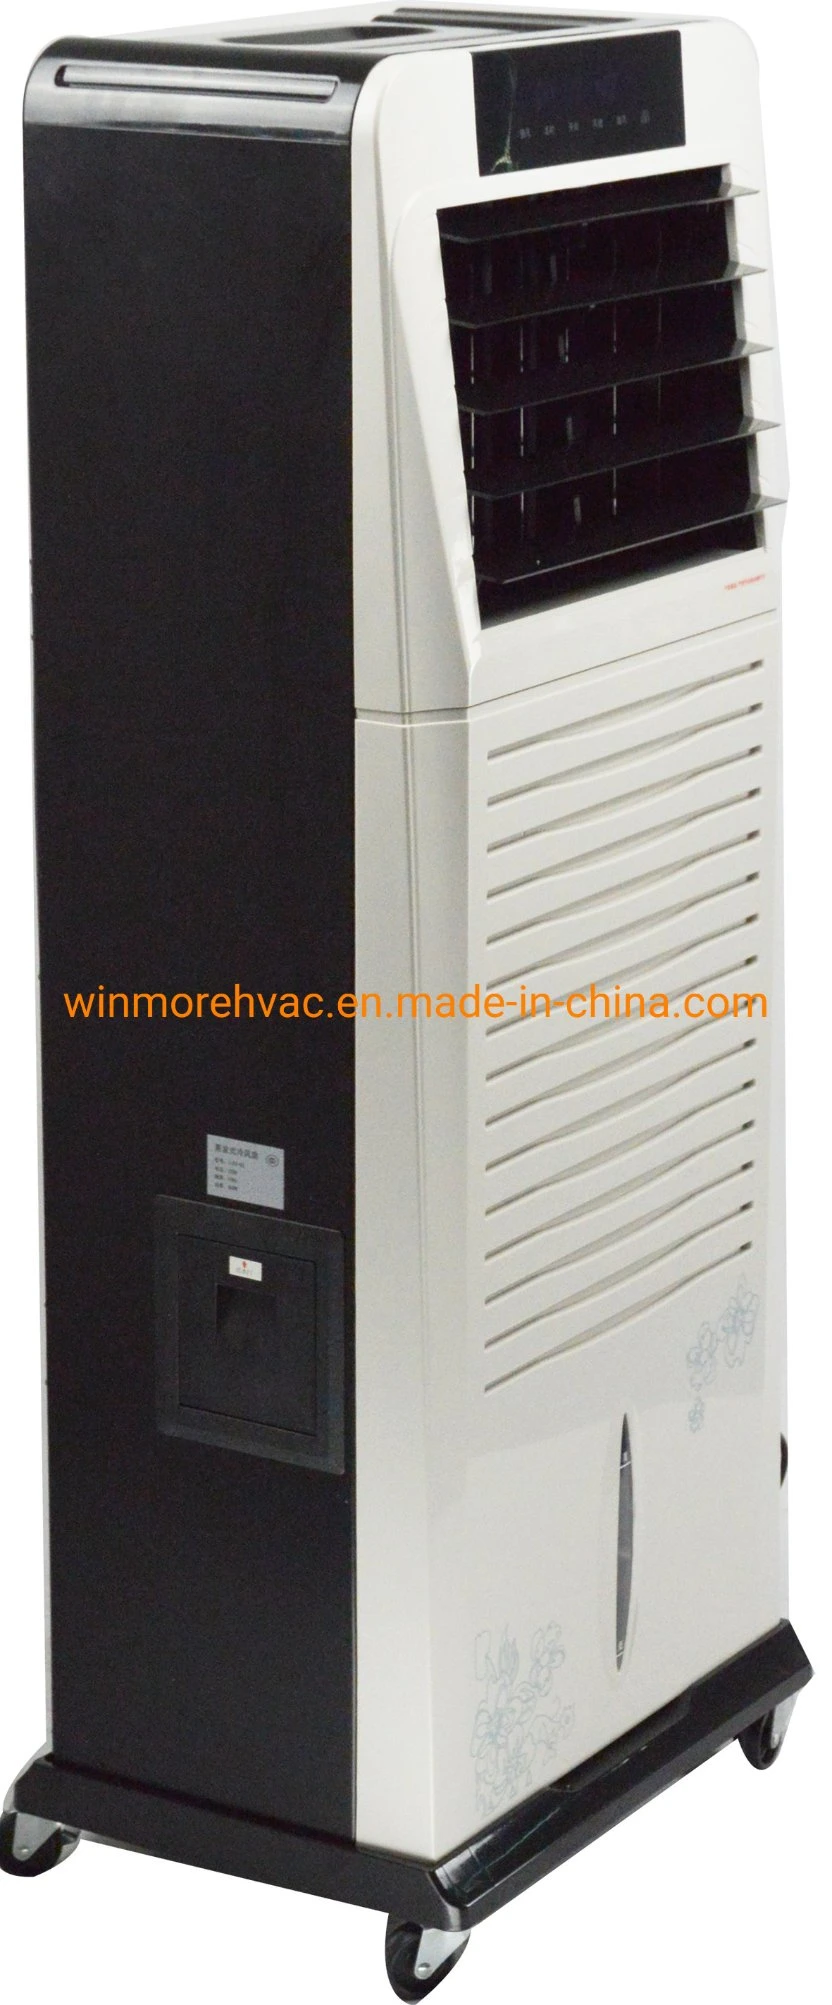 10000BTU Portable Air Conditioner/ Temporary Air Conditioner/Spot Air Conditioner